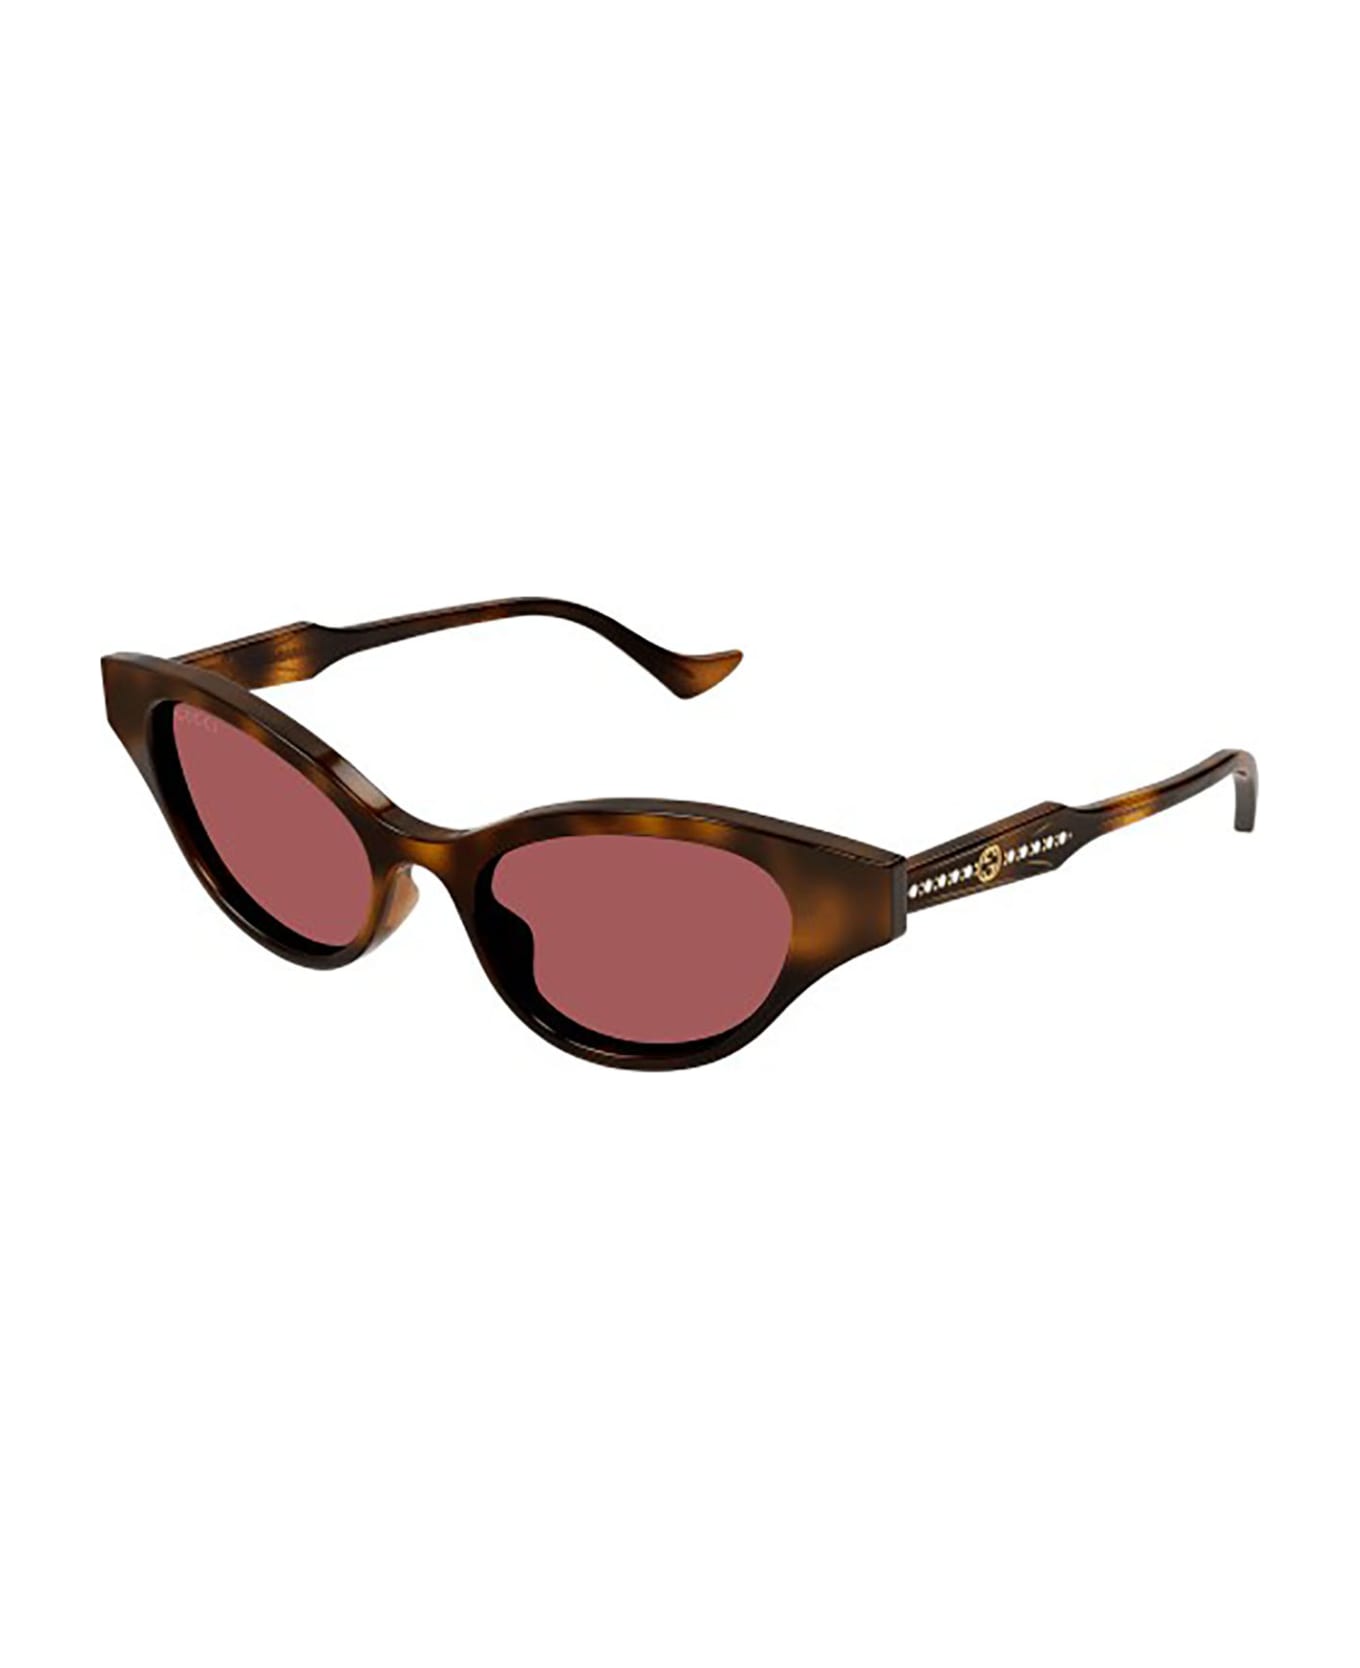 Gucci Eyewear GG1298S Sunglasses - Havana Havana Brown